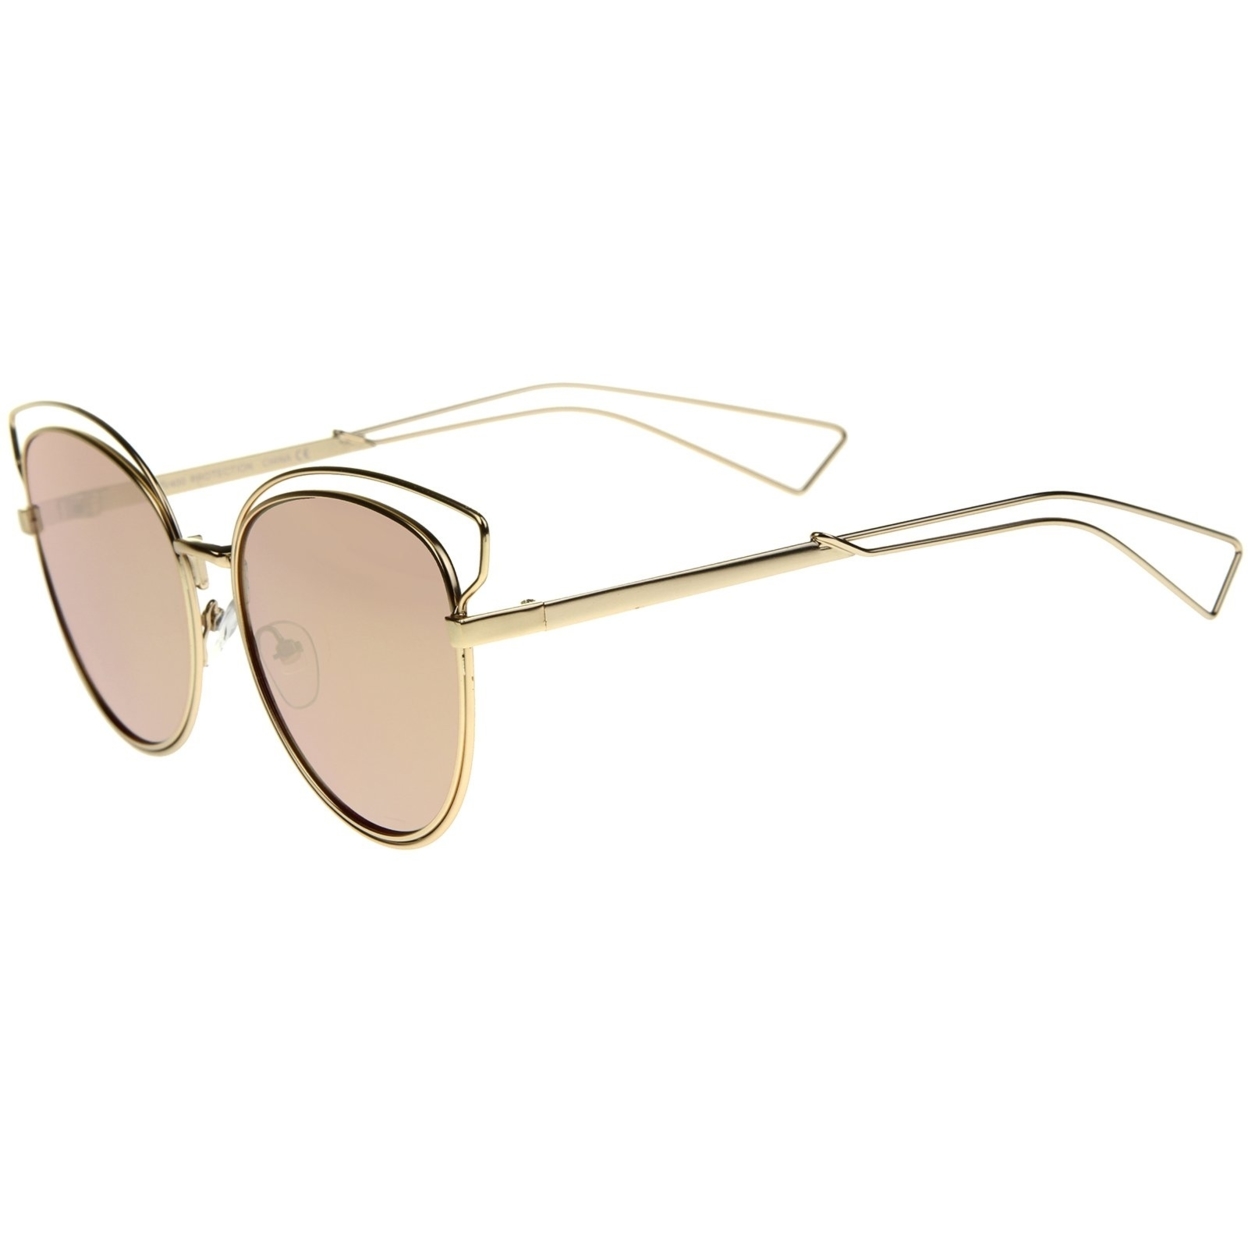 Womens Fashion Open Metal Frame Mirrored Lens Cat Eye Sunglasses 55mm - Gold / Gold Mirror